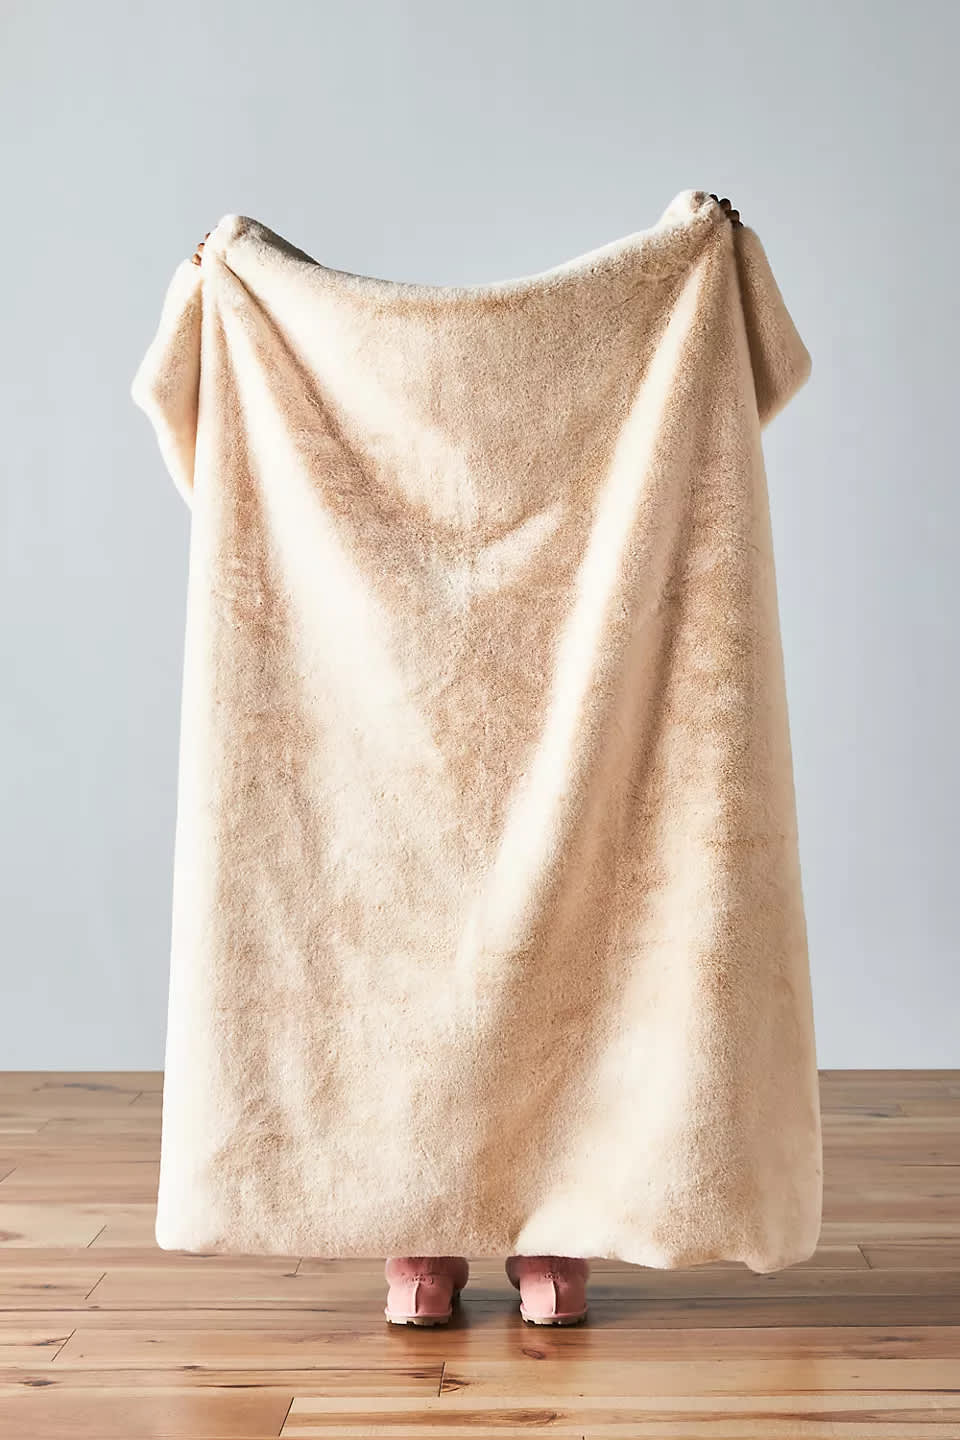 Sophie Faux Fur Throw Blanket: Anthropologie Reviews | Apartment